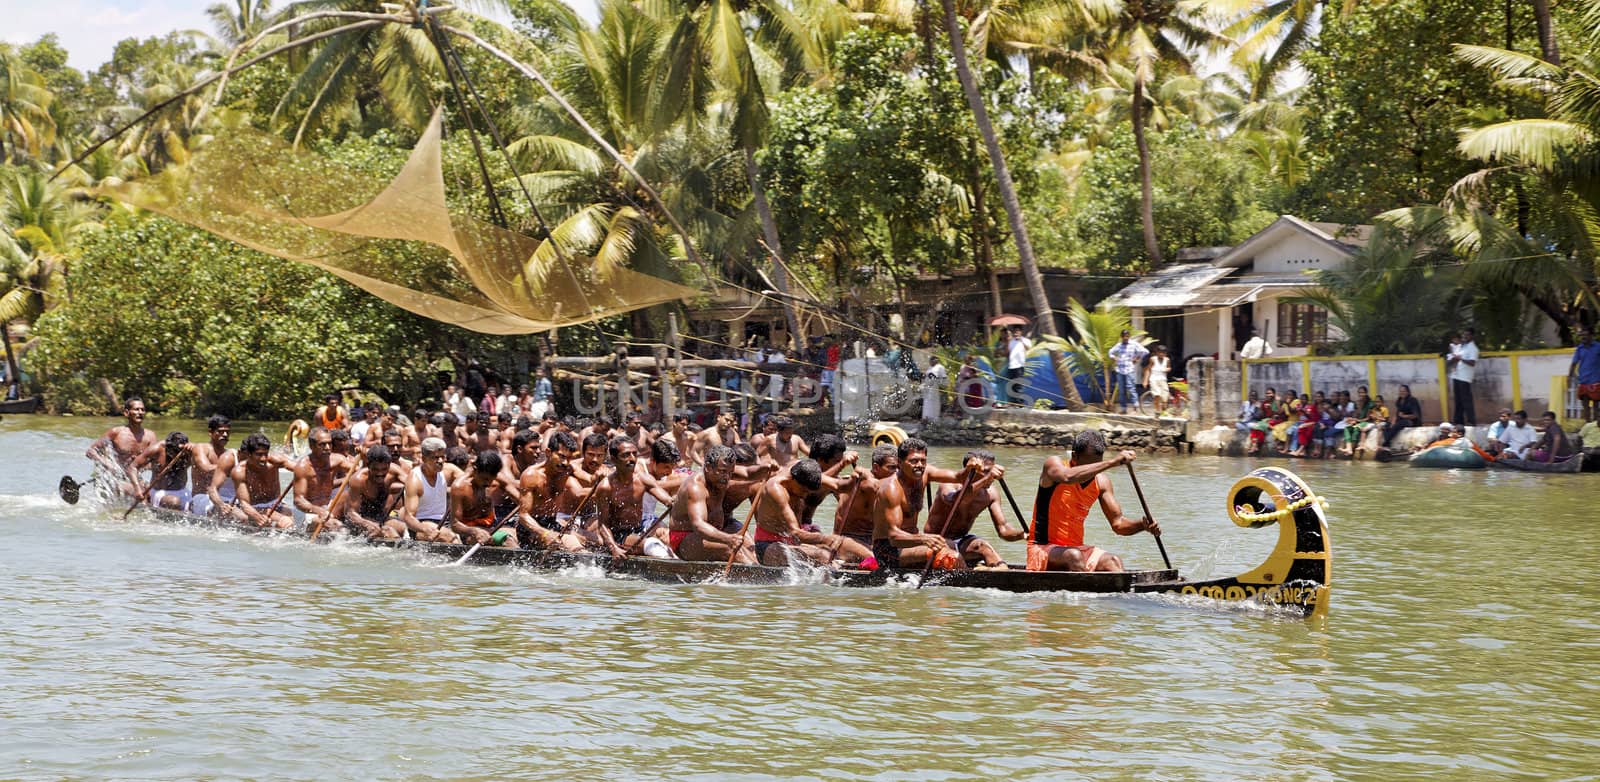 snake boat race Kerala half way finish line by arfabita